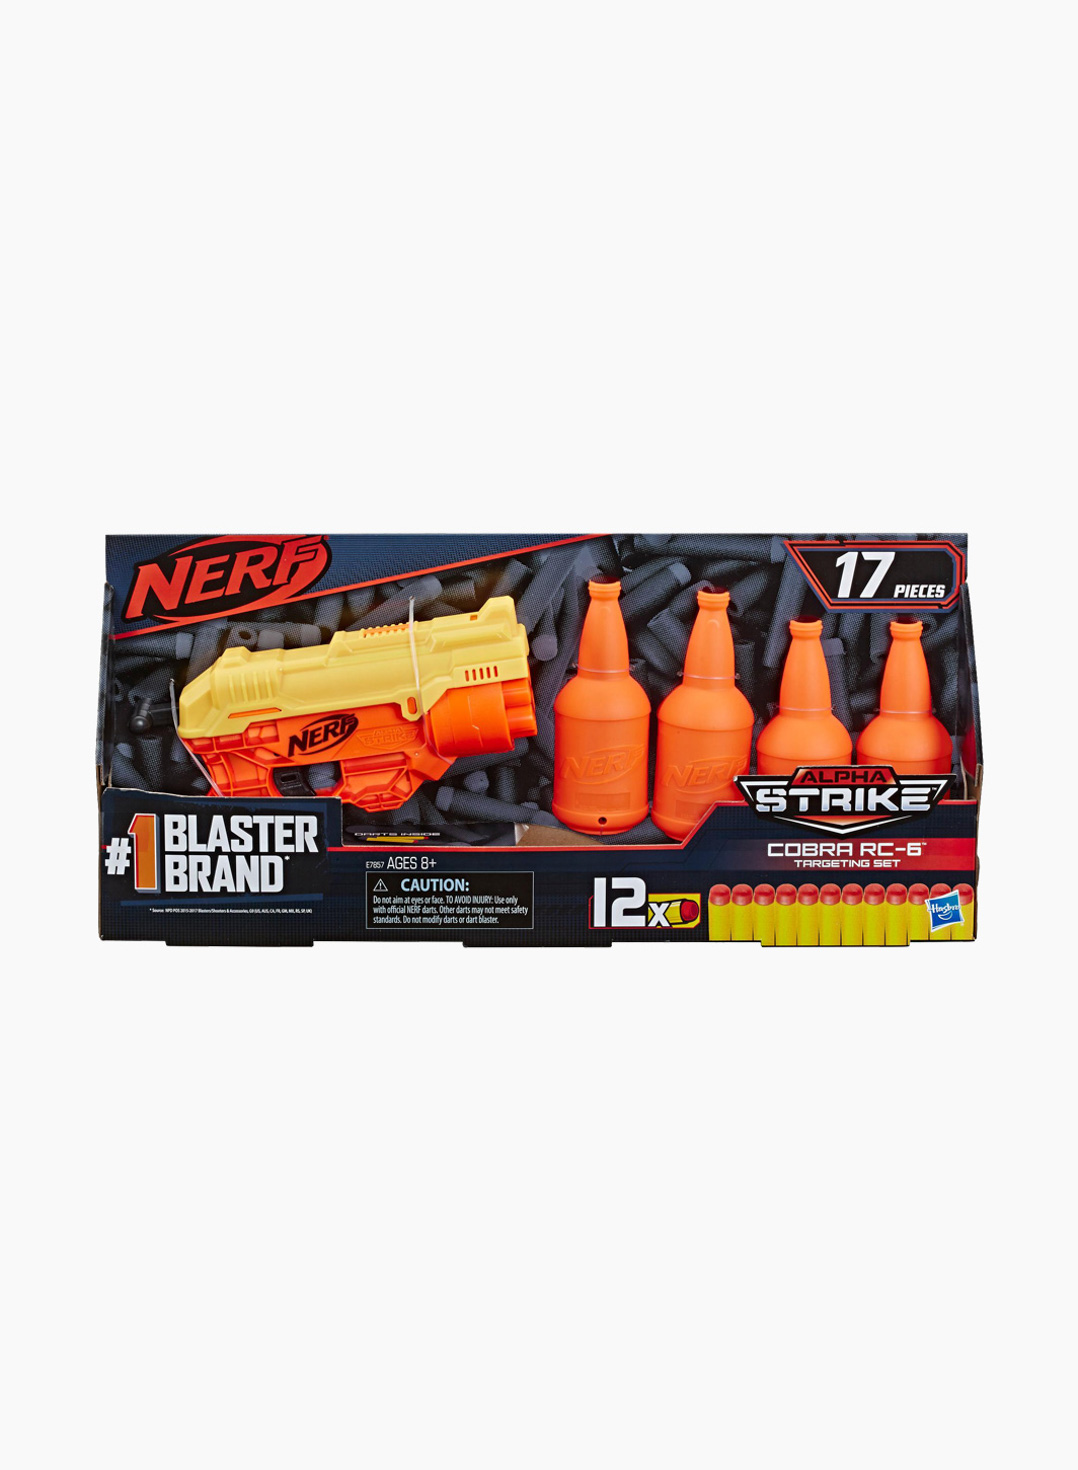 Hasbro Blaster NERF ALPHA STRIKE COBRA RC 6 WITH TARGETS